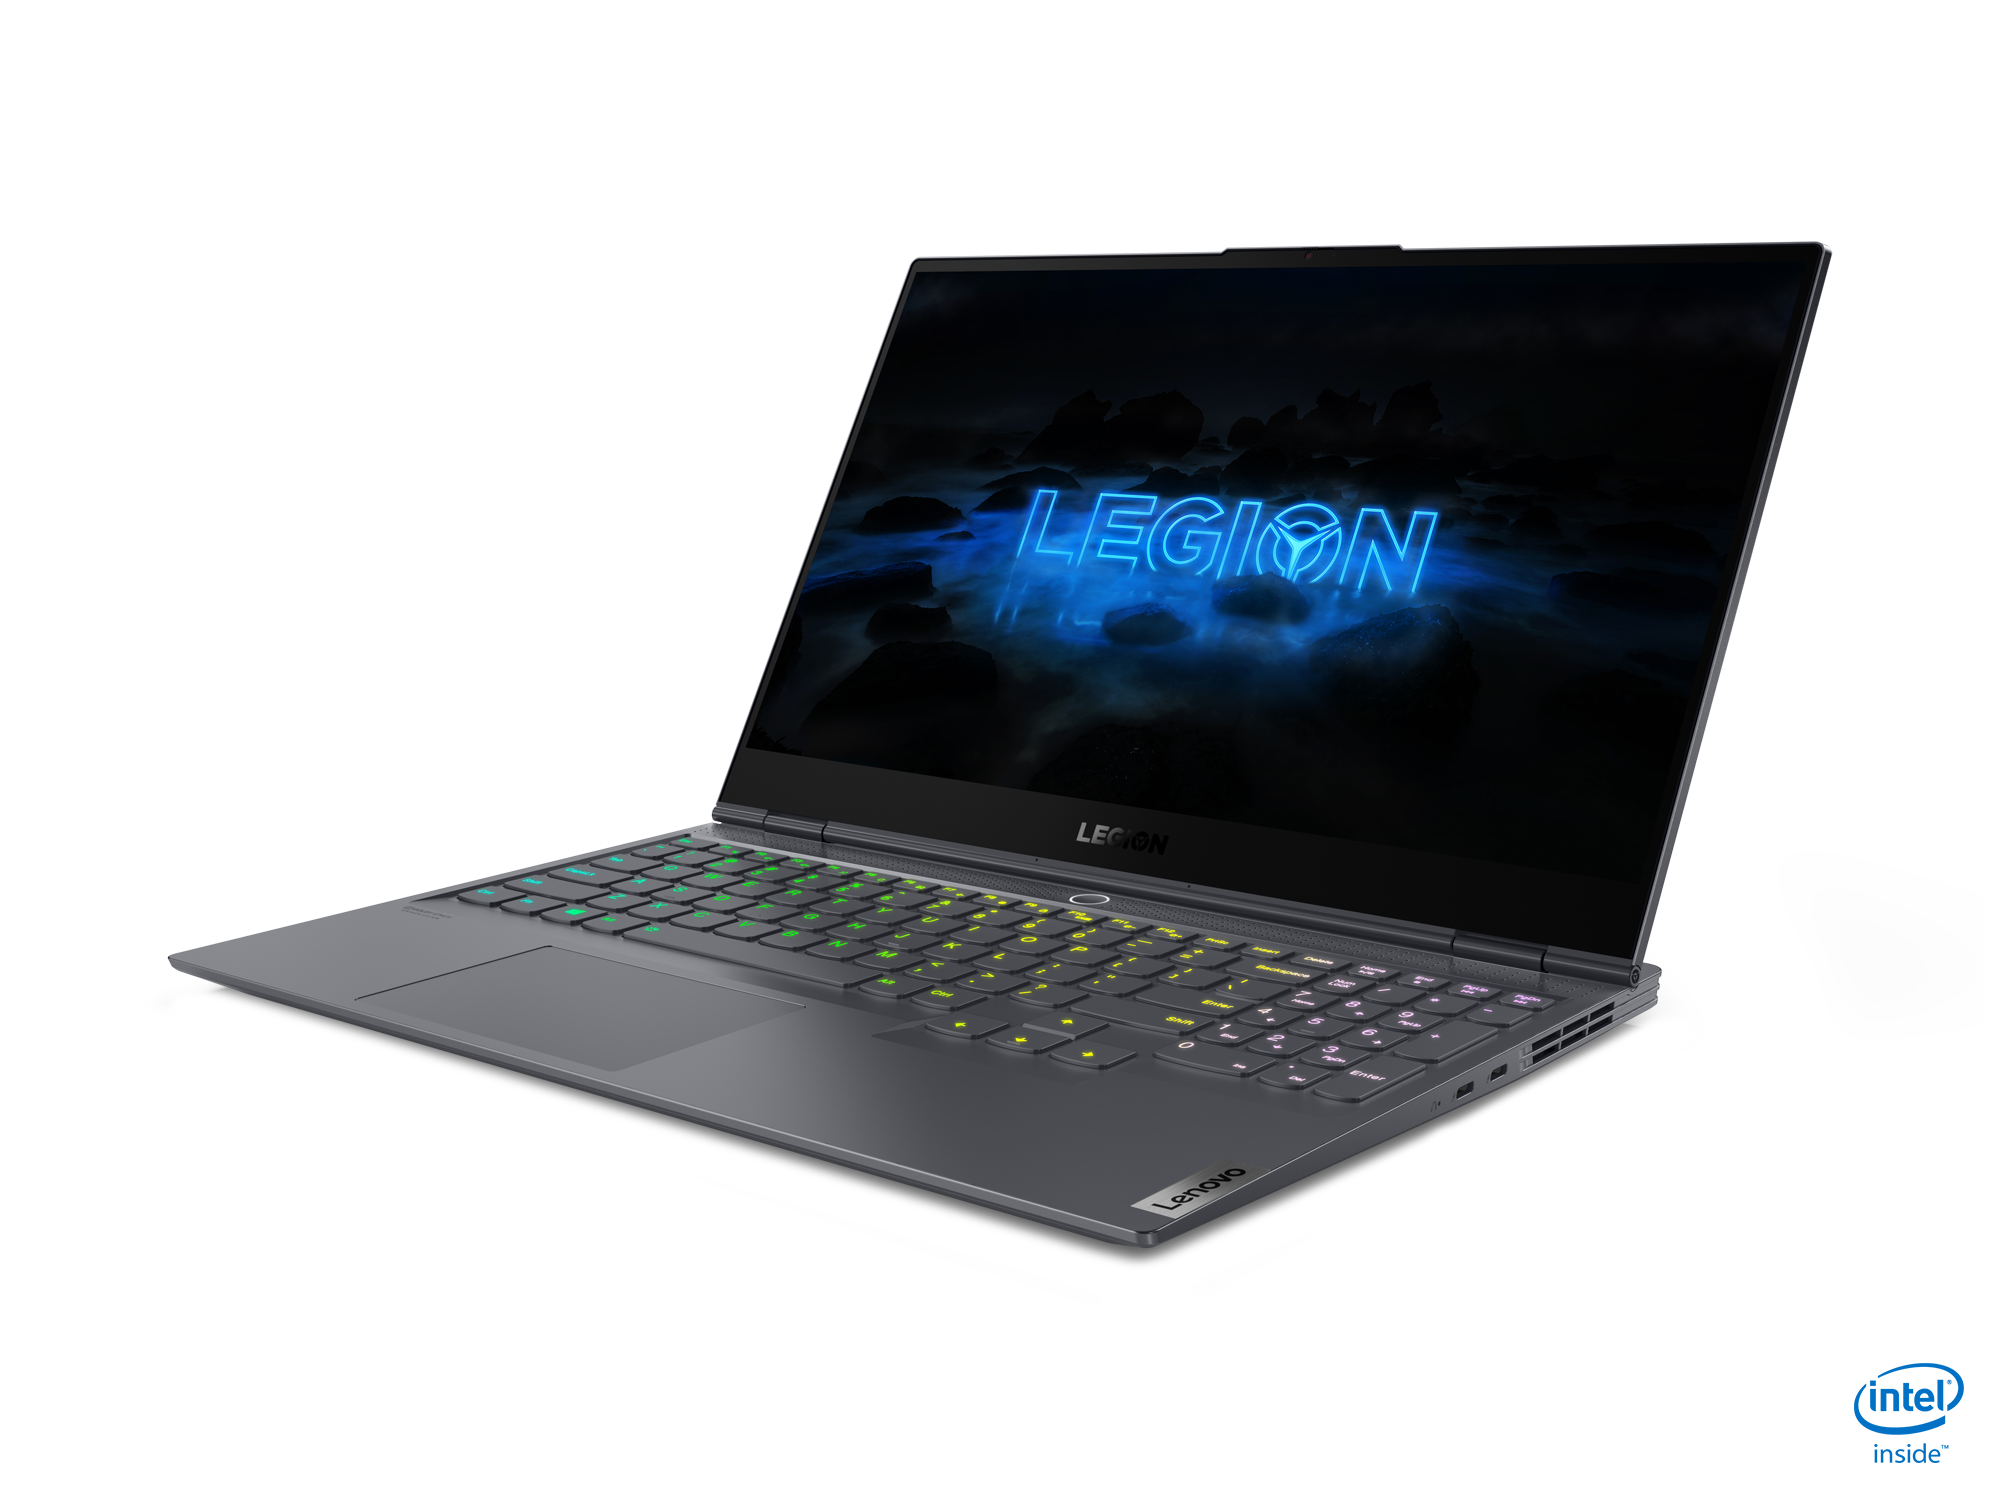 Lenovo has premiered a lightweight slim performance-class laptop